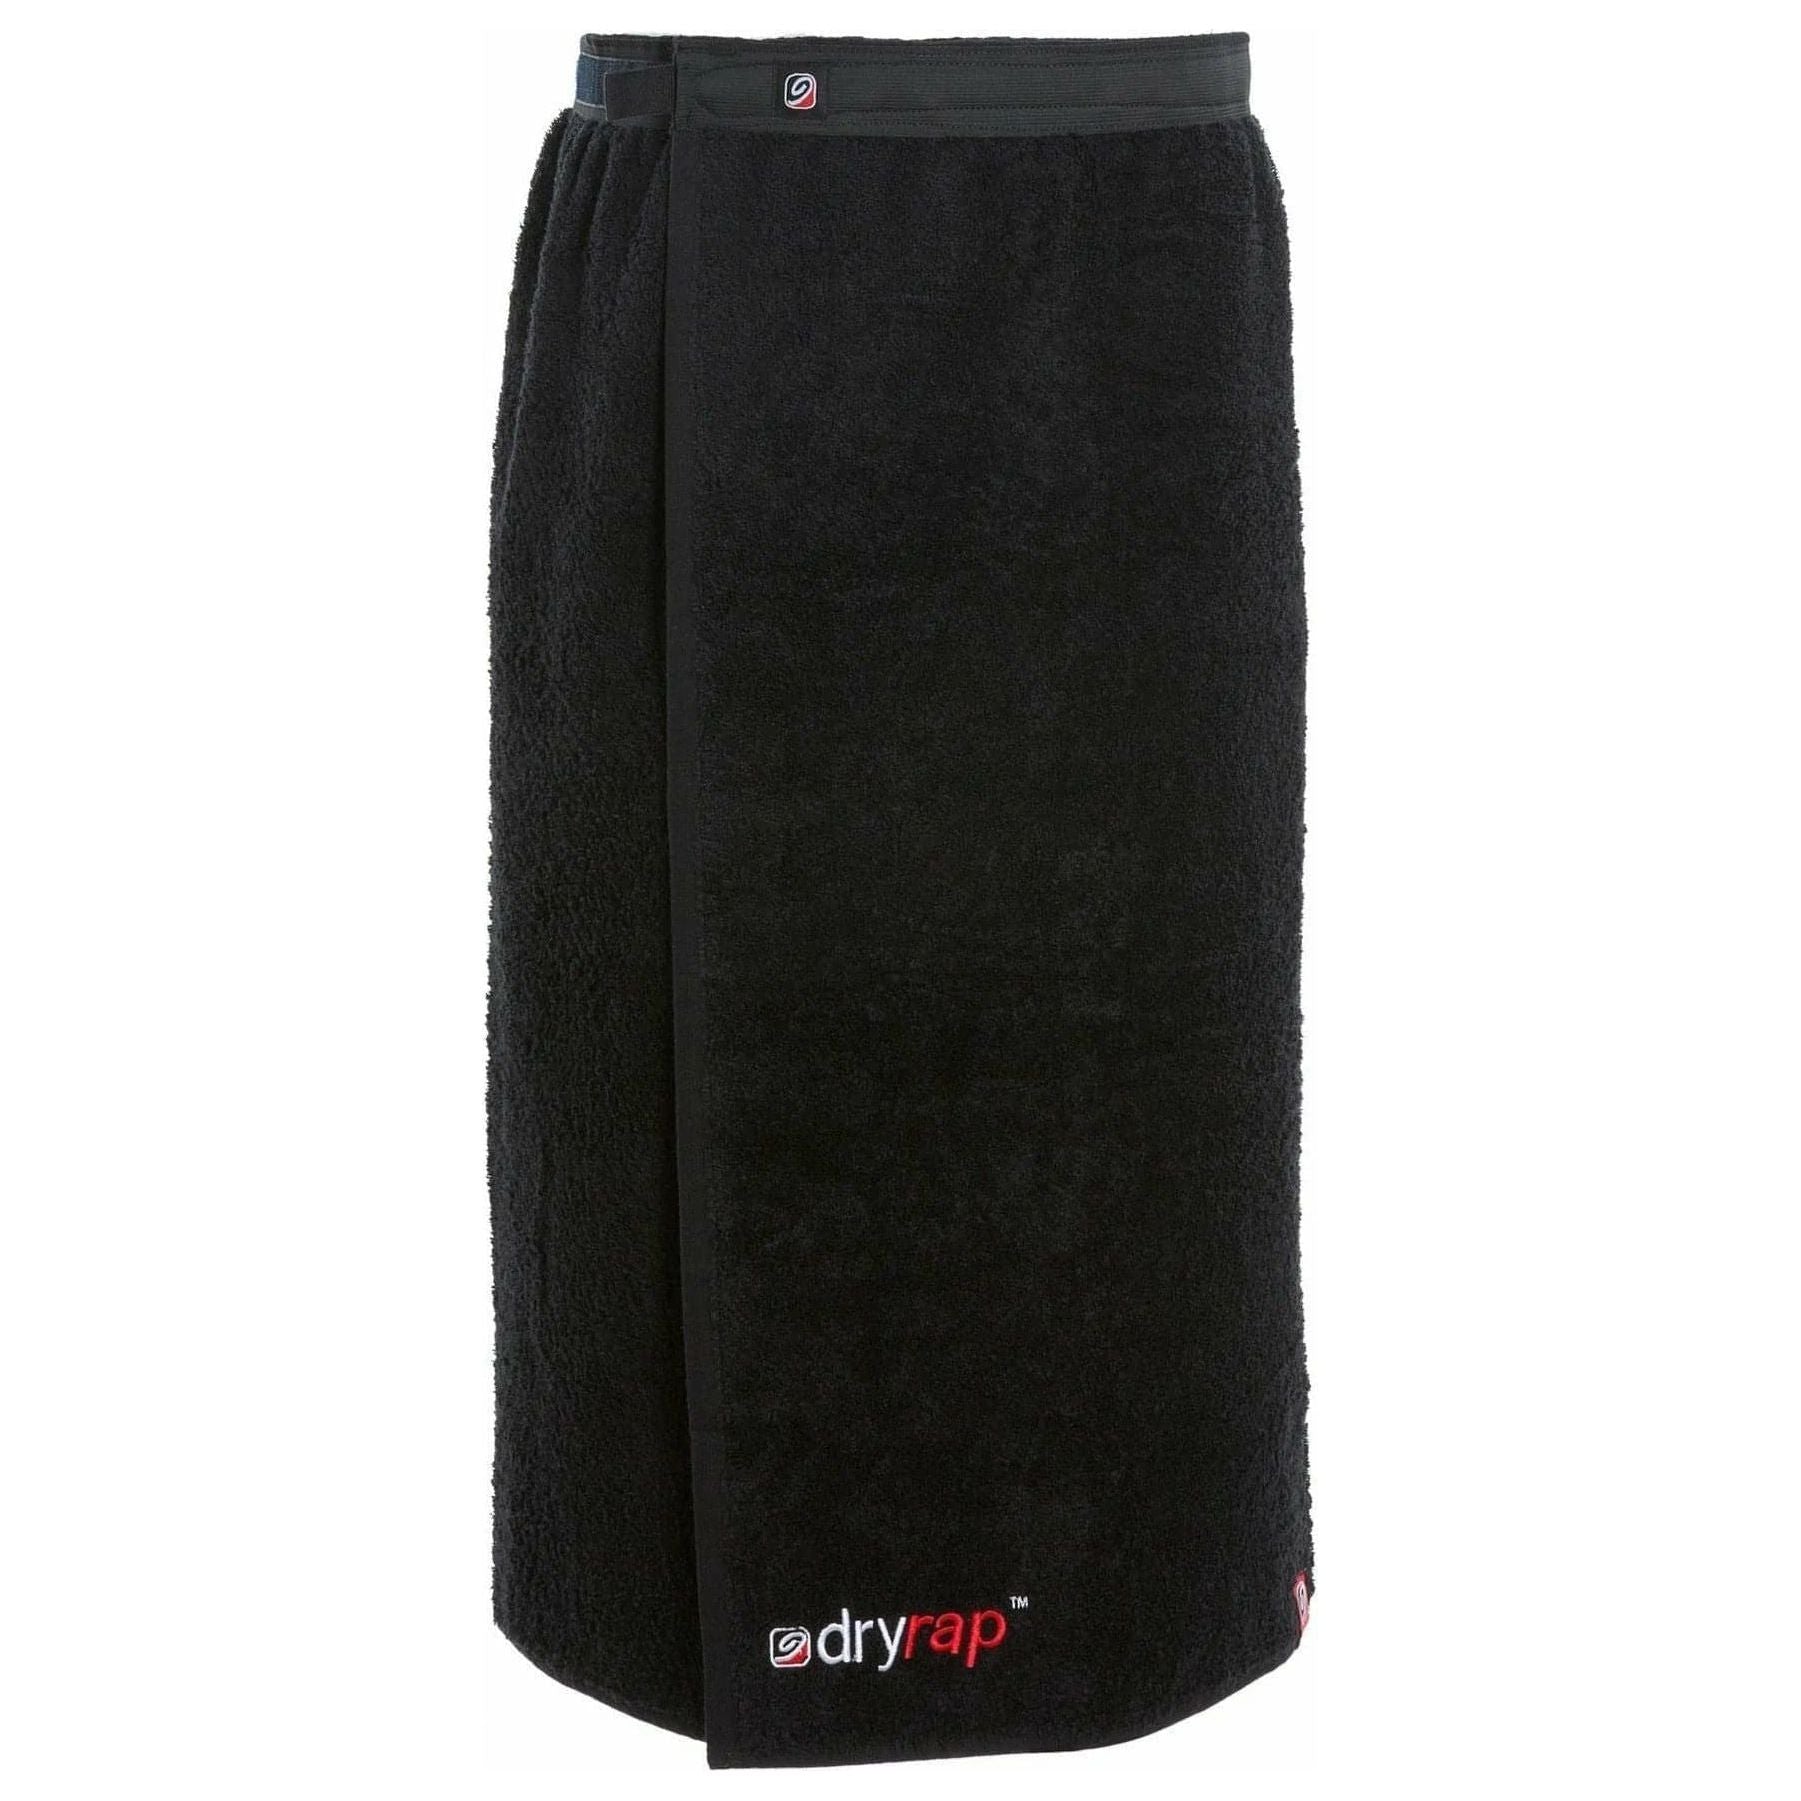 Dryrobe Dryrap Hands Free Changing Towel - Black 701304999907 - Start Fitness